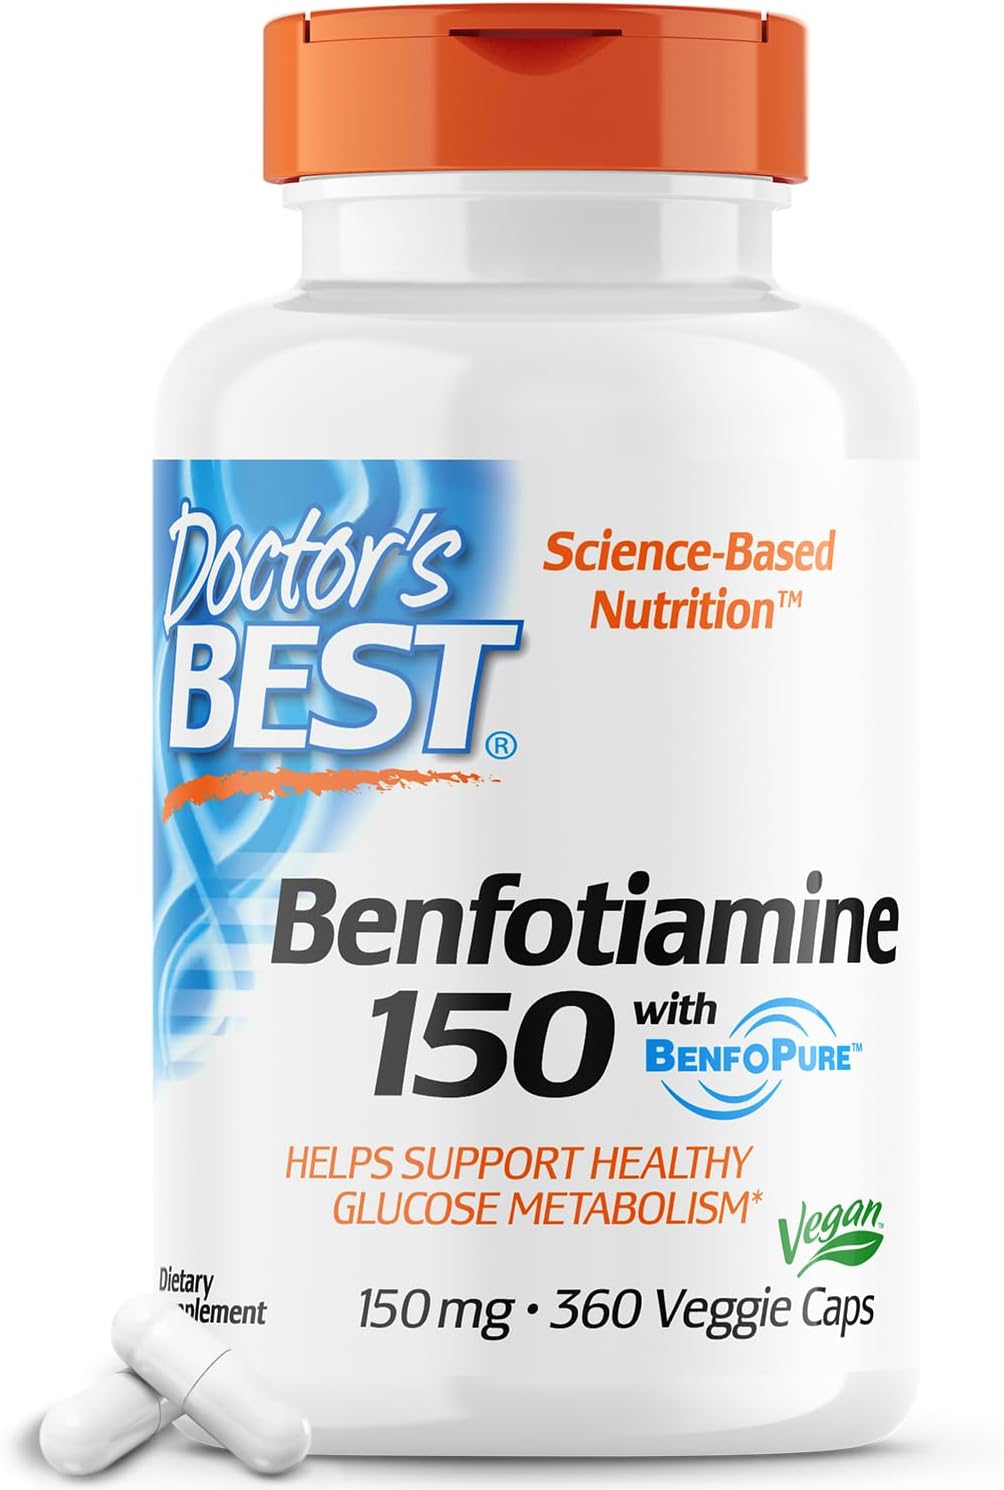 Doctor's Best BenFotiamine with BenfoPure, Non-GMO, Gluten Free, Vegan, Helps Maintain Blood Sugar L